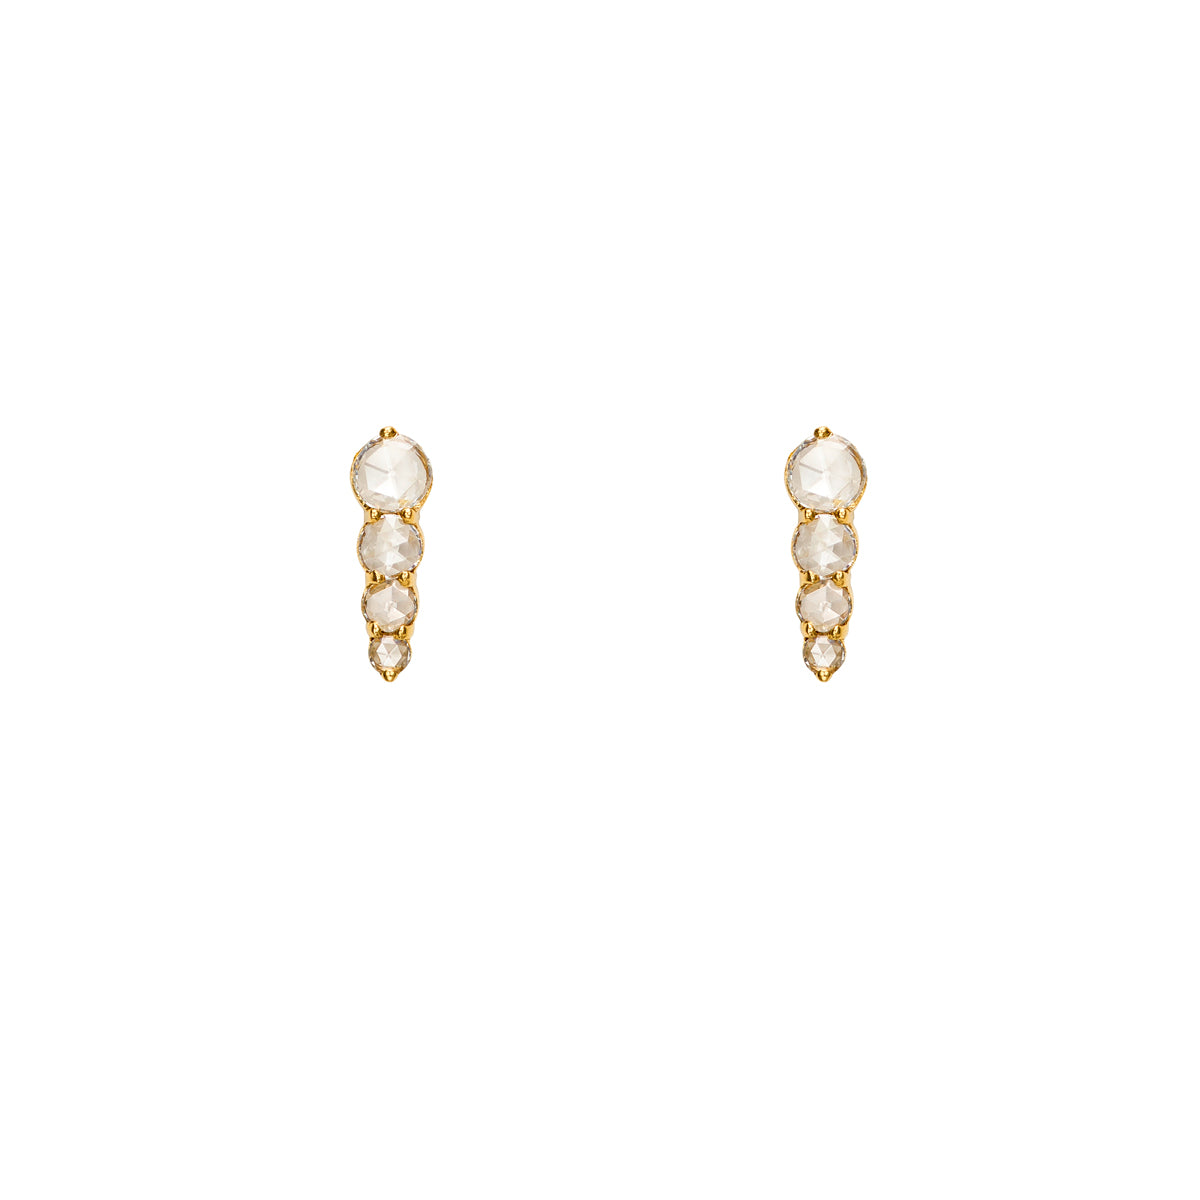 rose cut diamonds drop earrings PRE 507 14k_08ccd591 e317 406c 844d 1929ab7f5c63